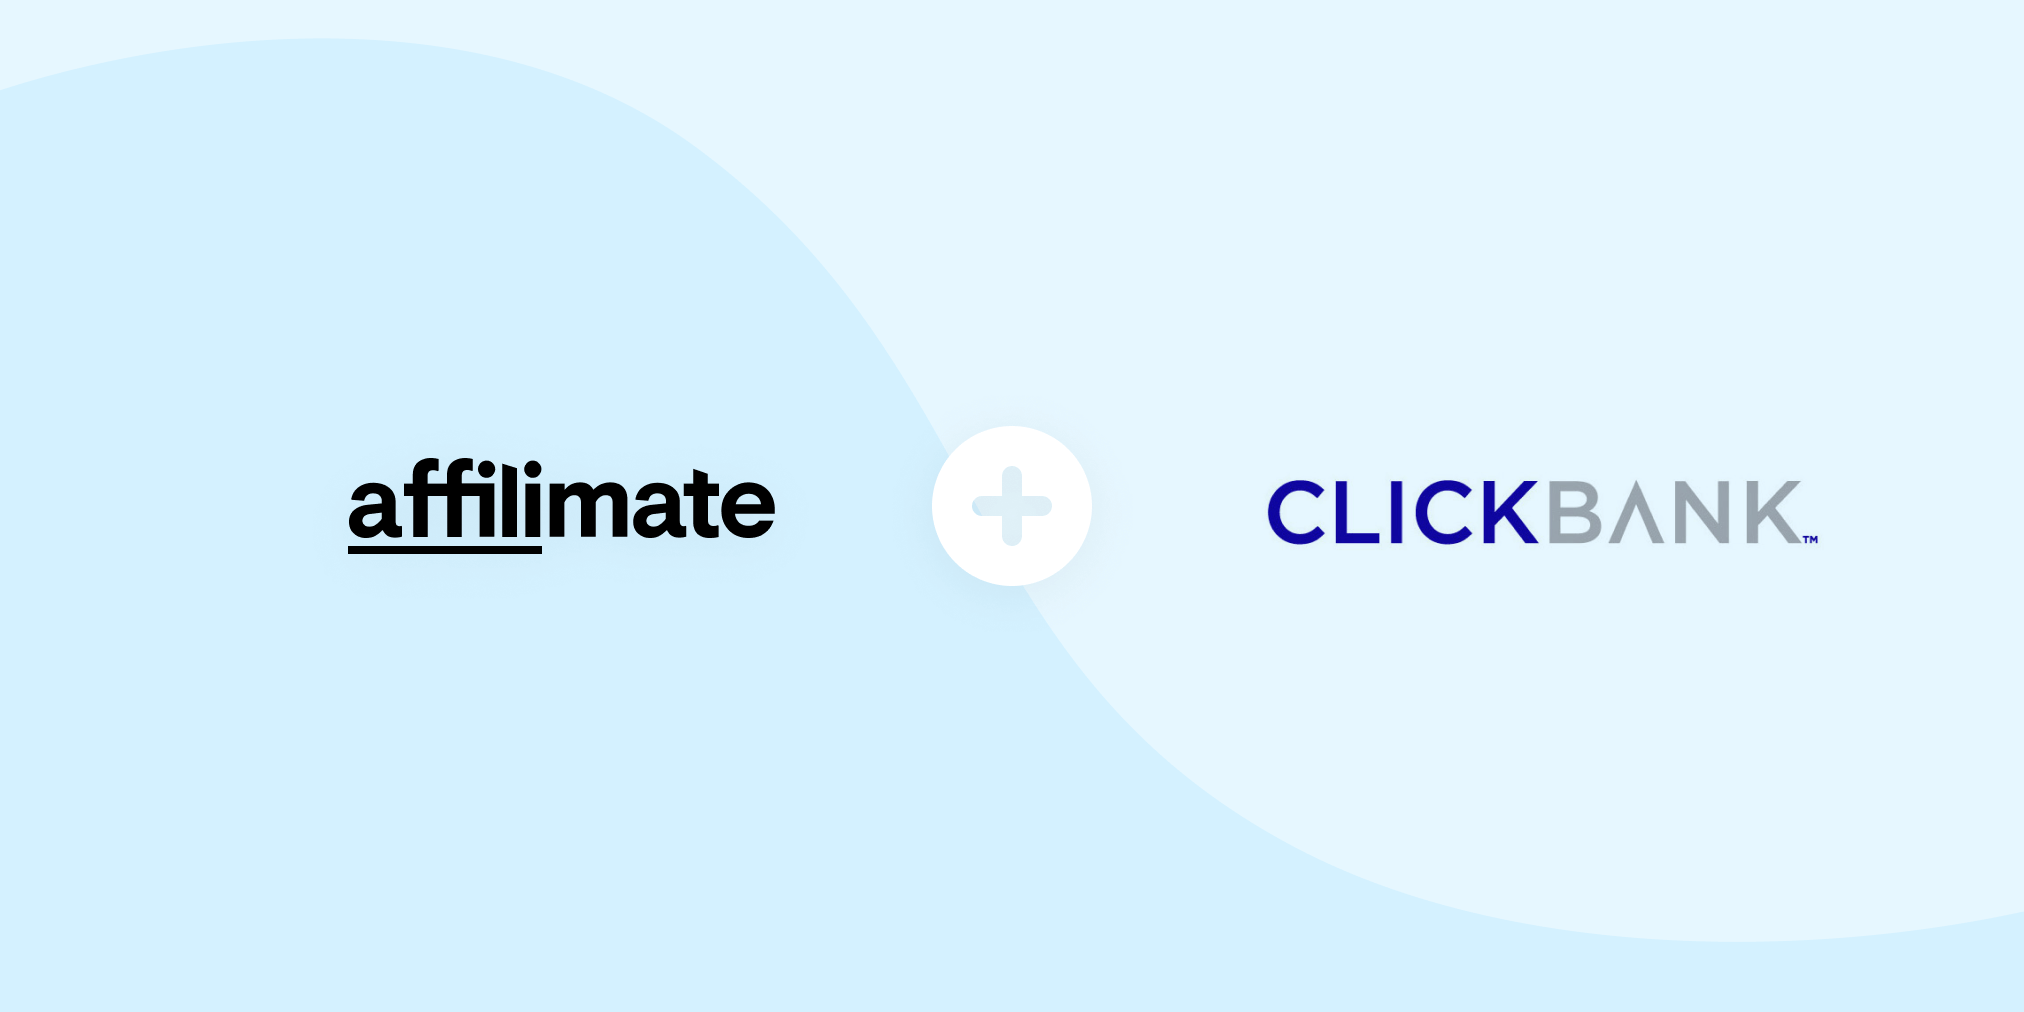 New Integration: ClickBank Arrives in Affilimate